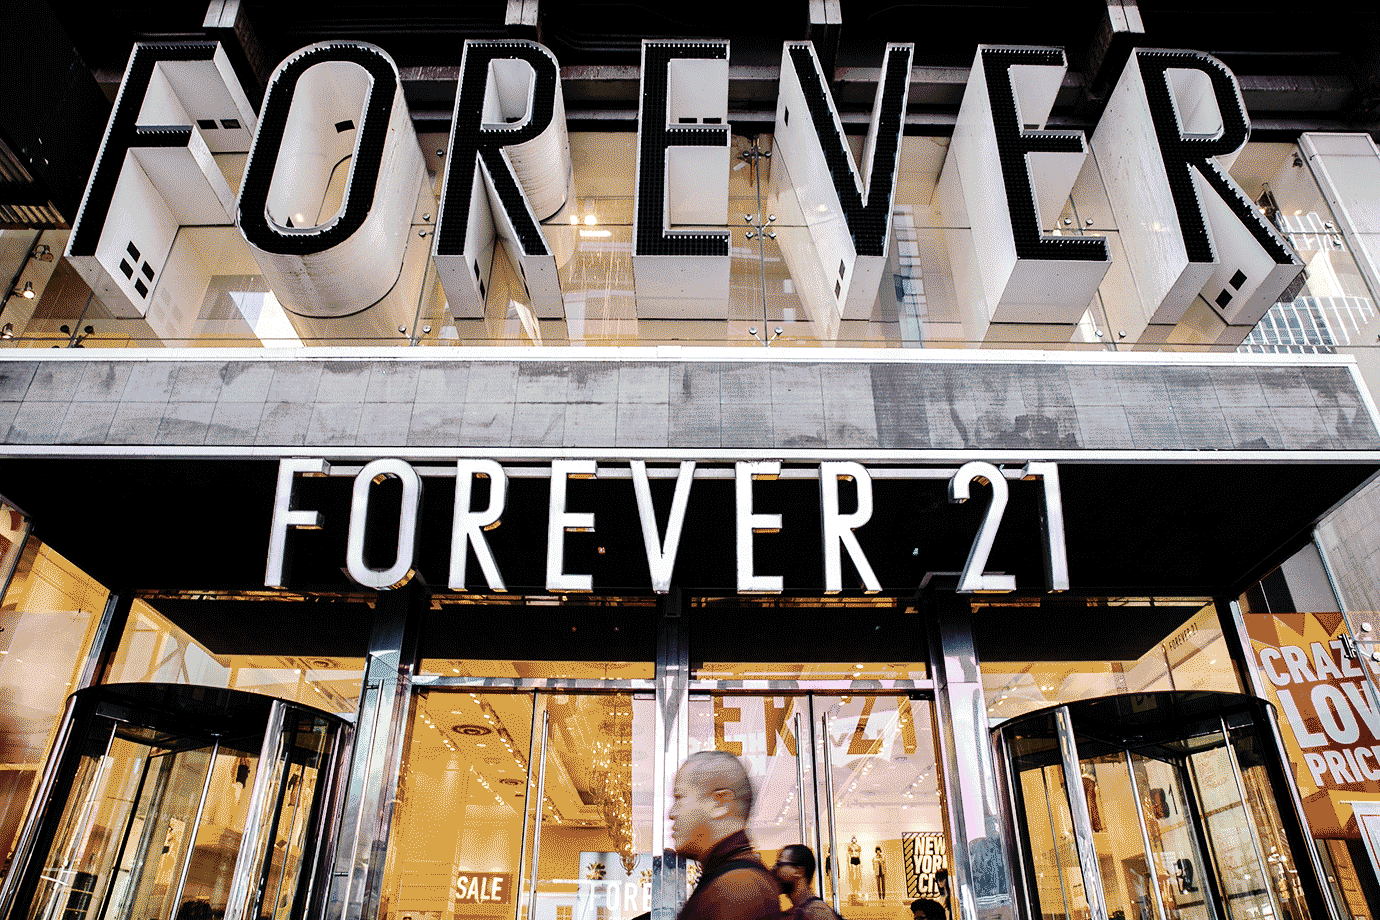 Forever 21 revela data de abertura da loja – NiT